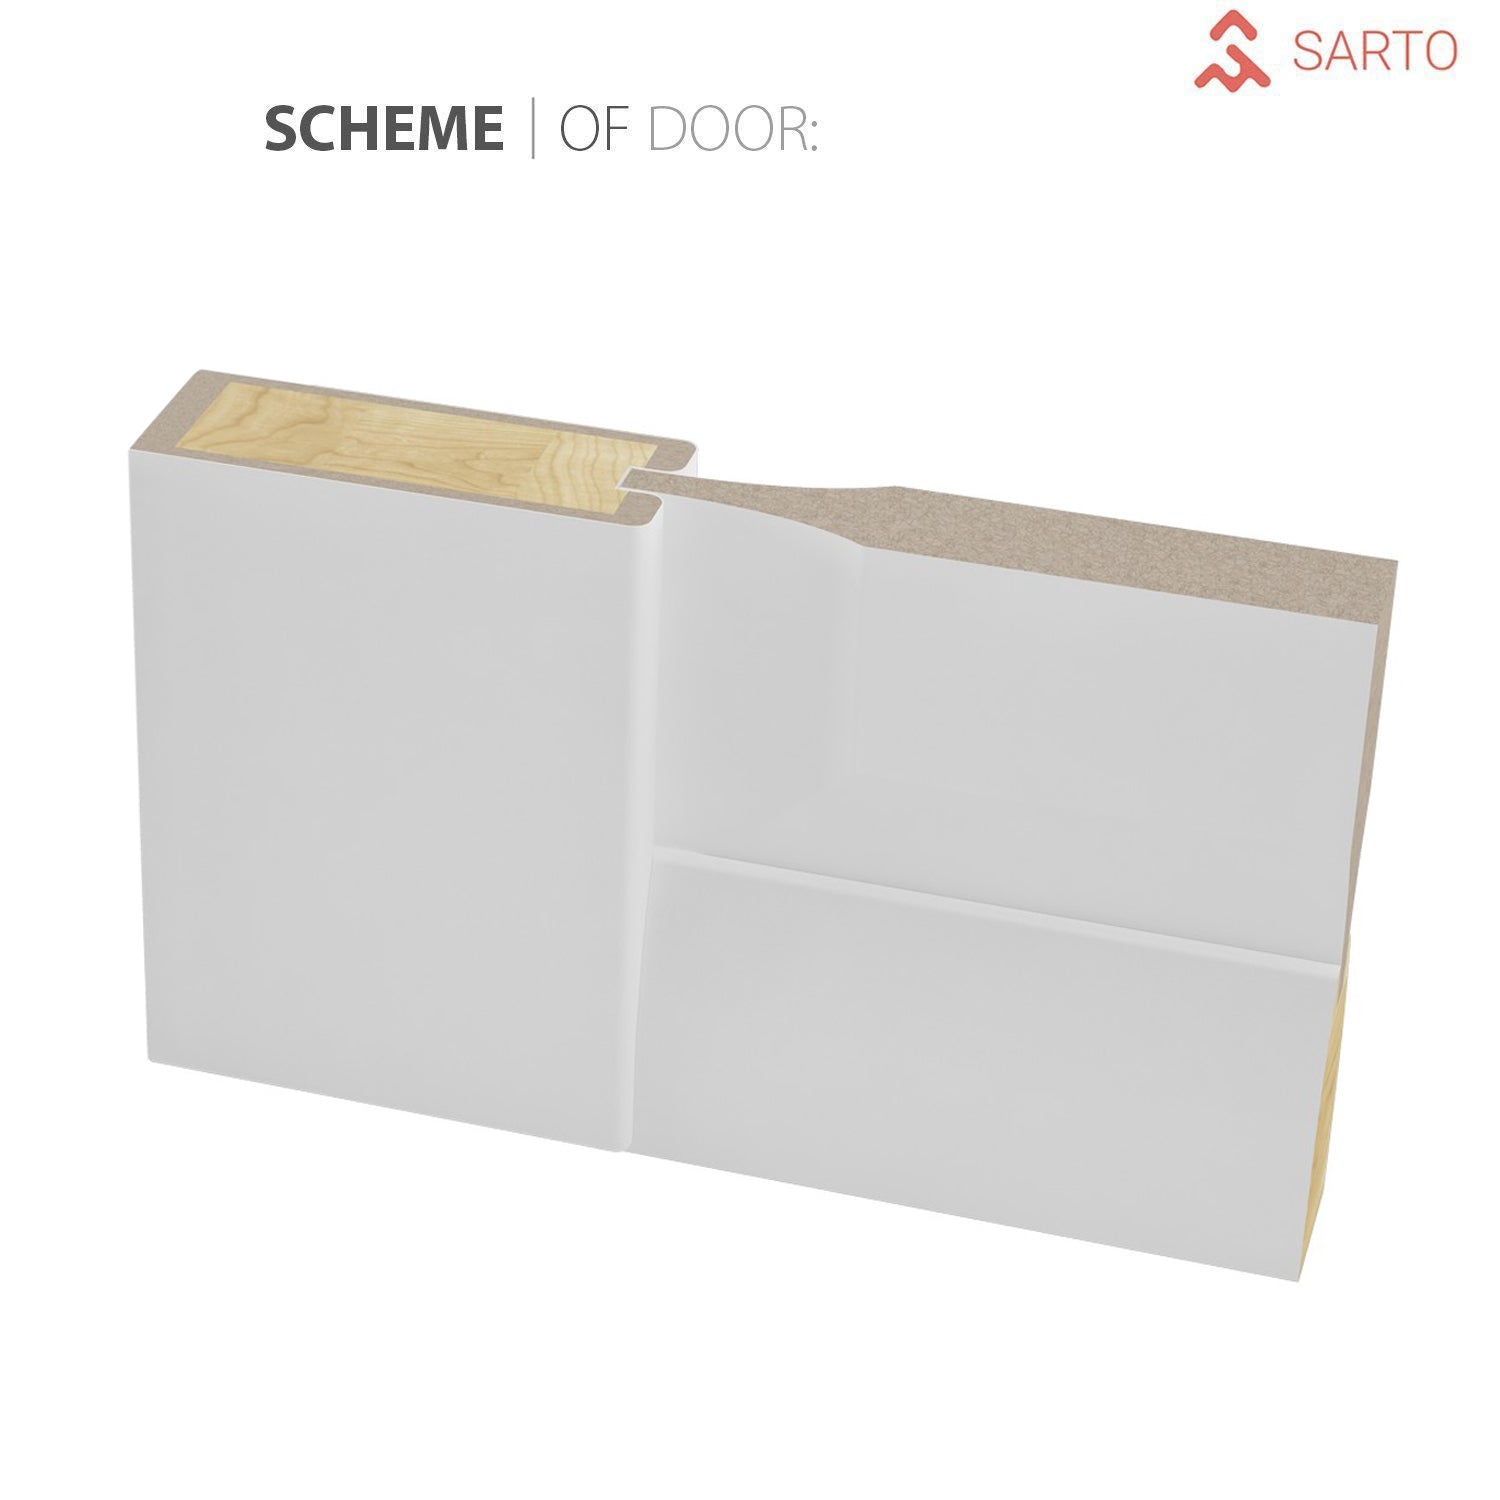 SARTODOORS Sliding Bypass Closet Doors 84 x 84 with hardware | Lucia 31 Matte White | Rails Hardware | Pantry 3-Panels Doors 